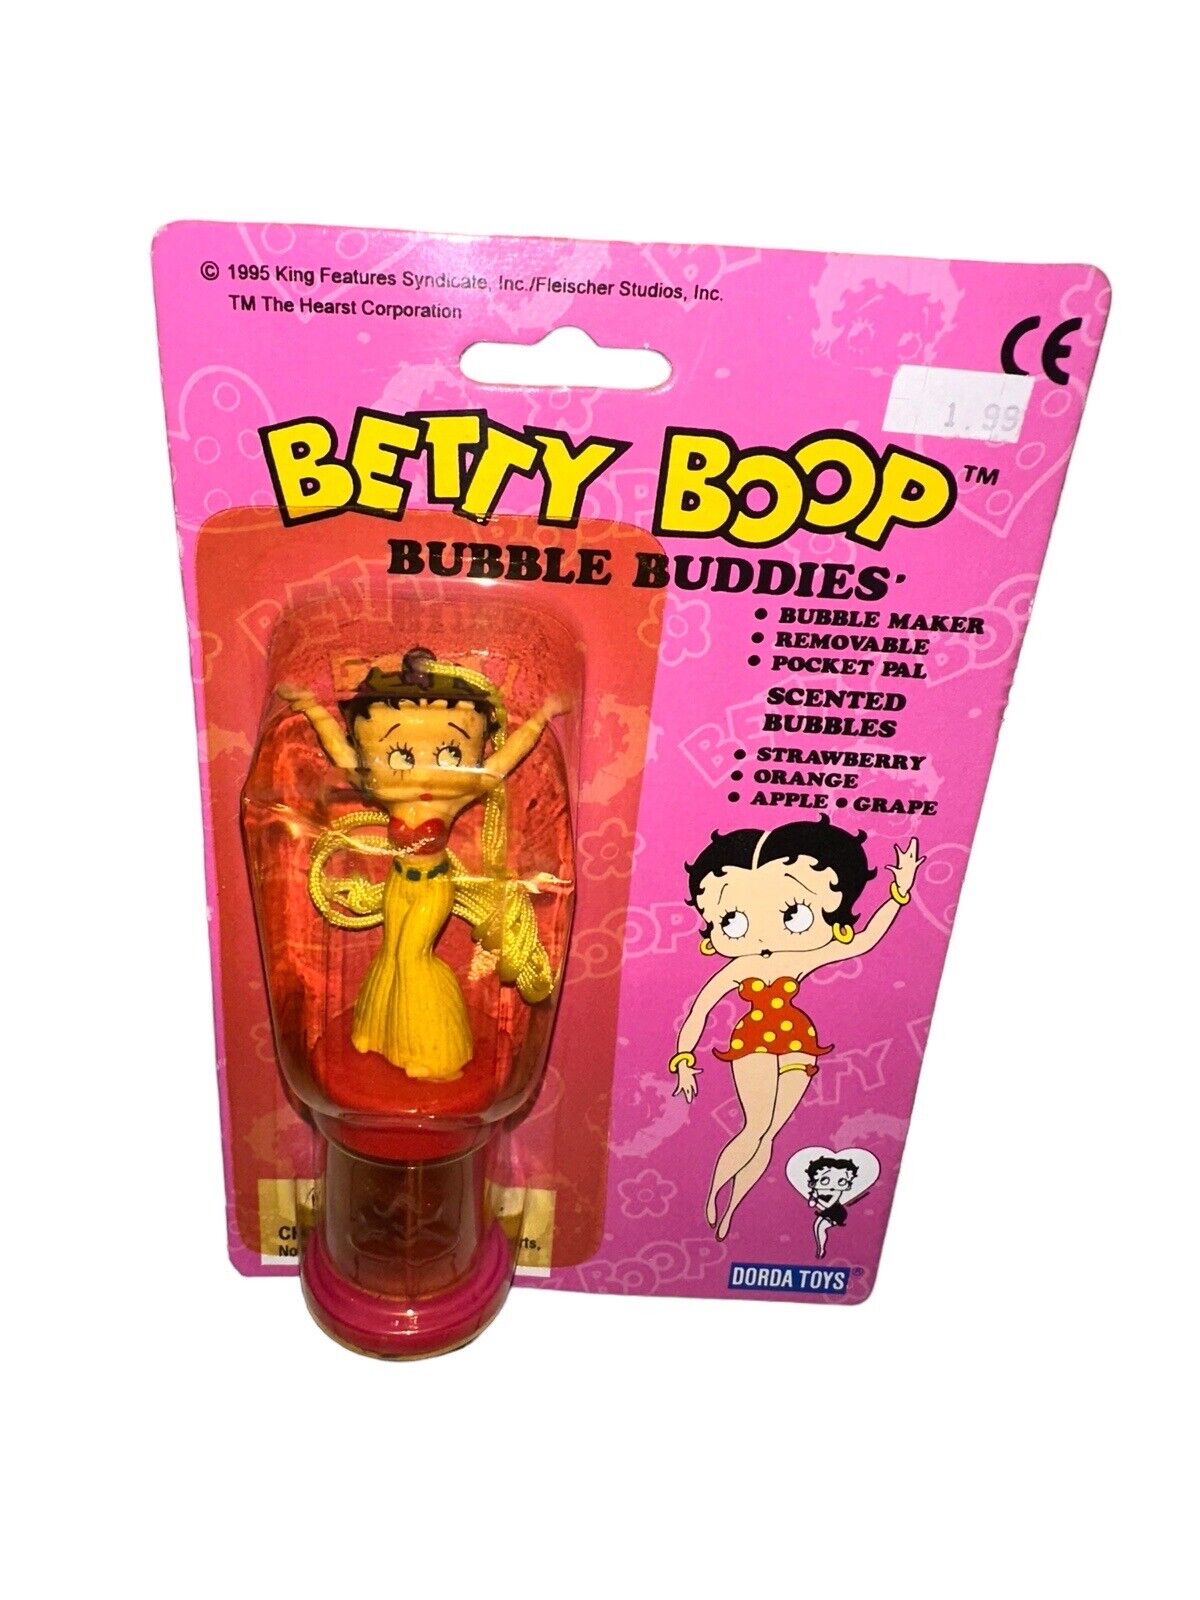 Vintage 1995 Betty Boop Bubble Buddies Bubble Maker Dorda Toys